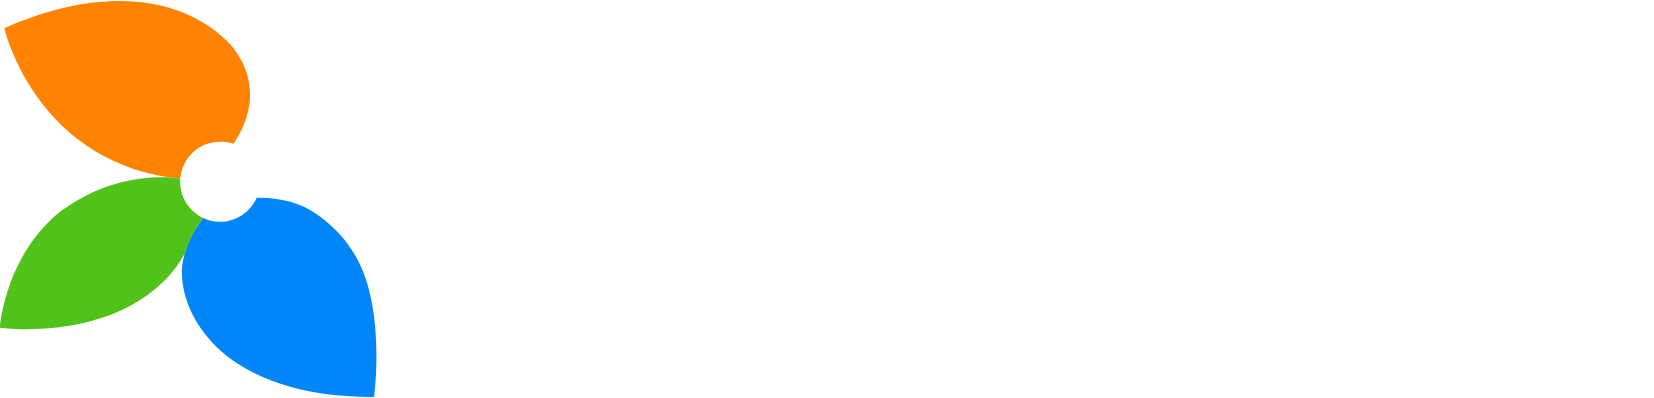 IDP Education Logo groß für dunkle Hintergründe (transparentes PNG)